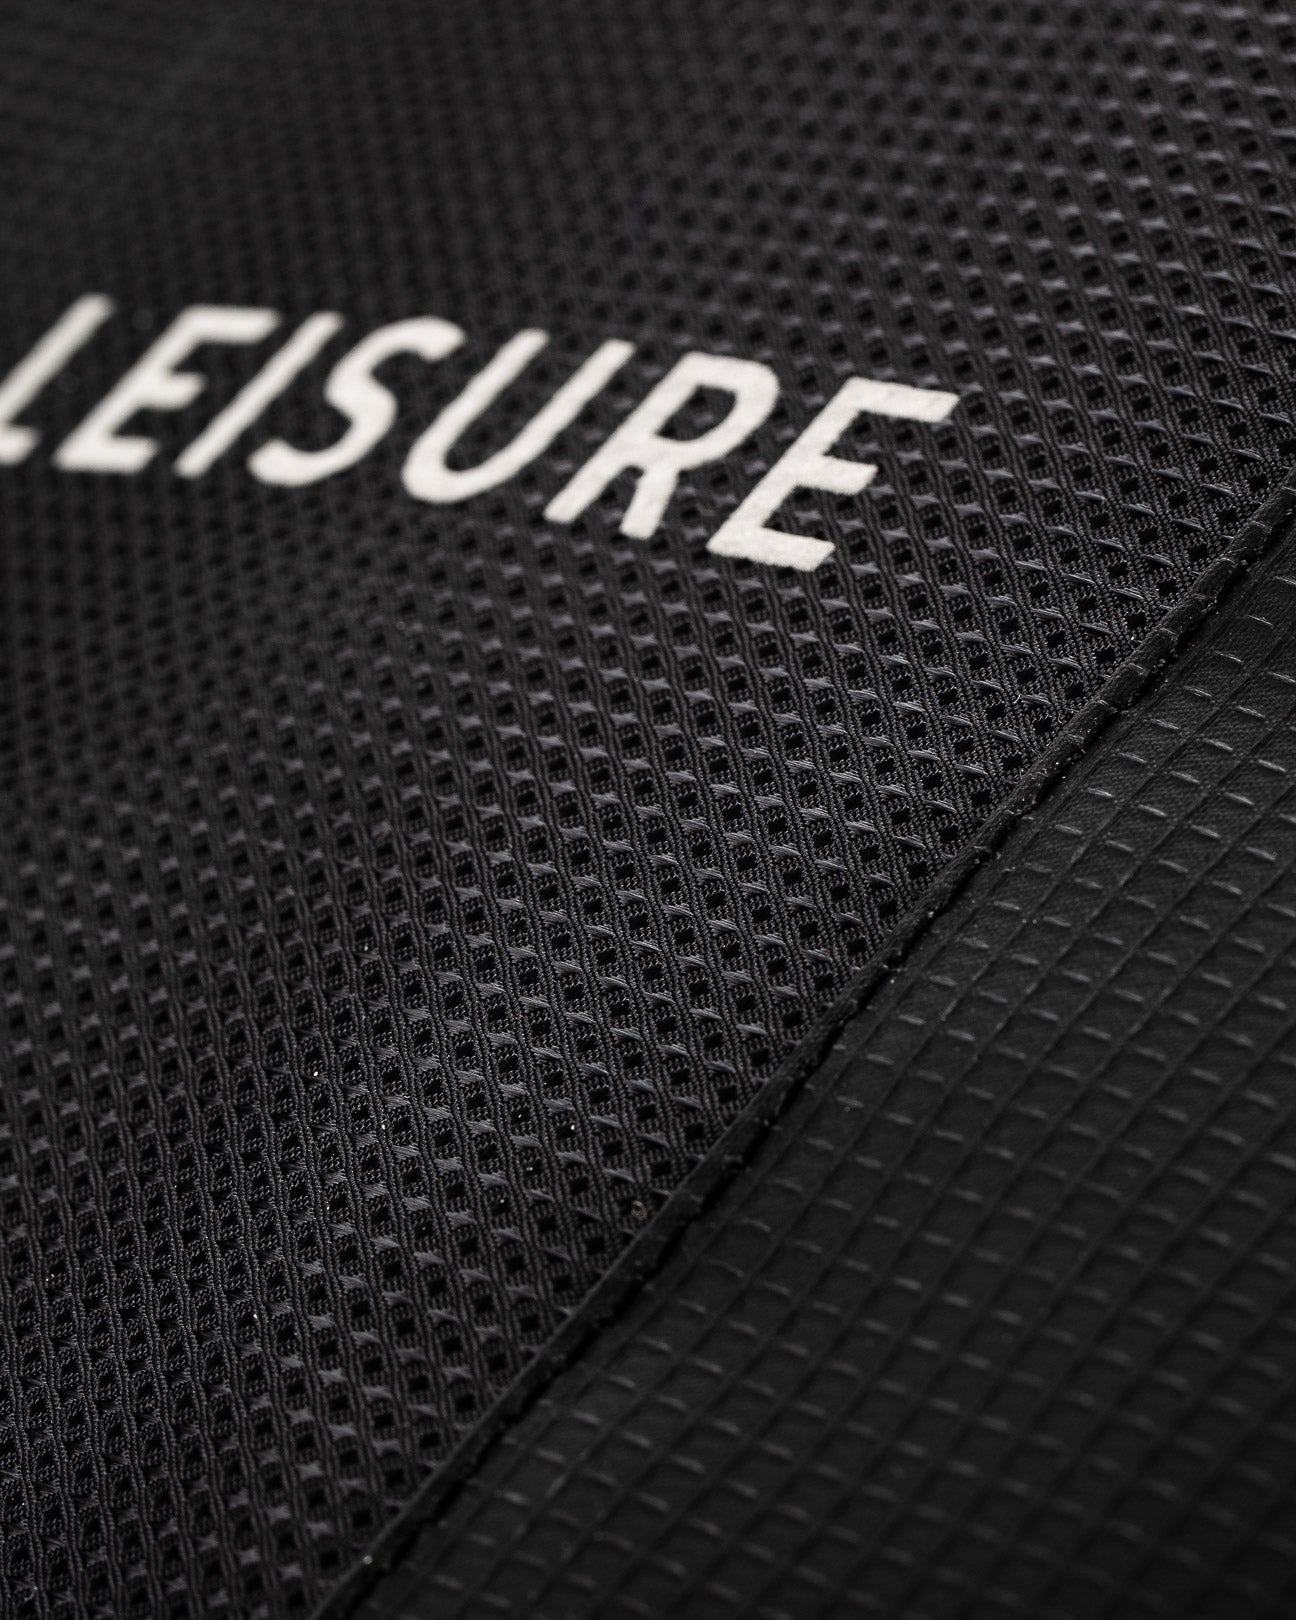 Creatures of Leisure Double DT2.0 Shortboard Boardbag.